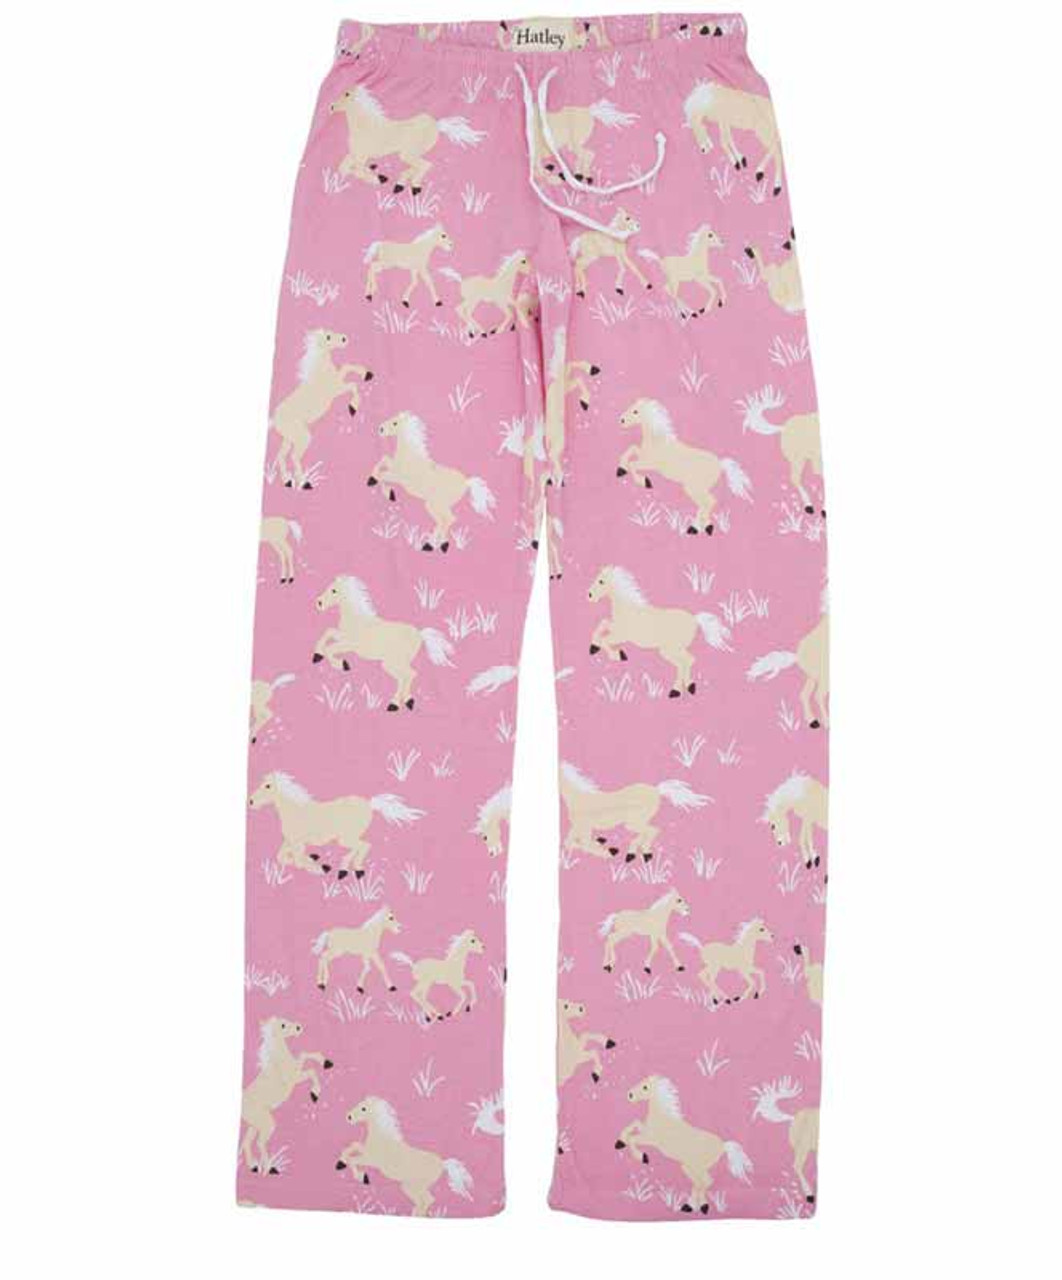 Just Love Girls Pajama Pants - Cute Pj Bottoms For Girls  45612-10539-blu-5-6 : Target